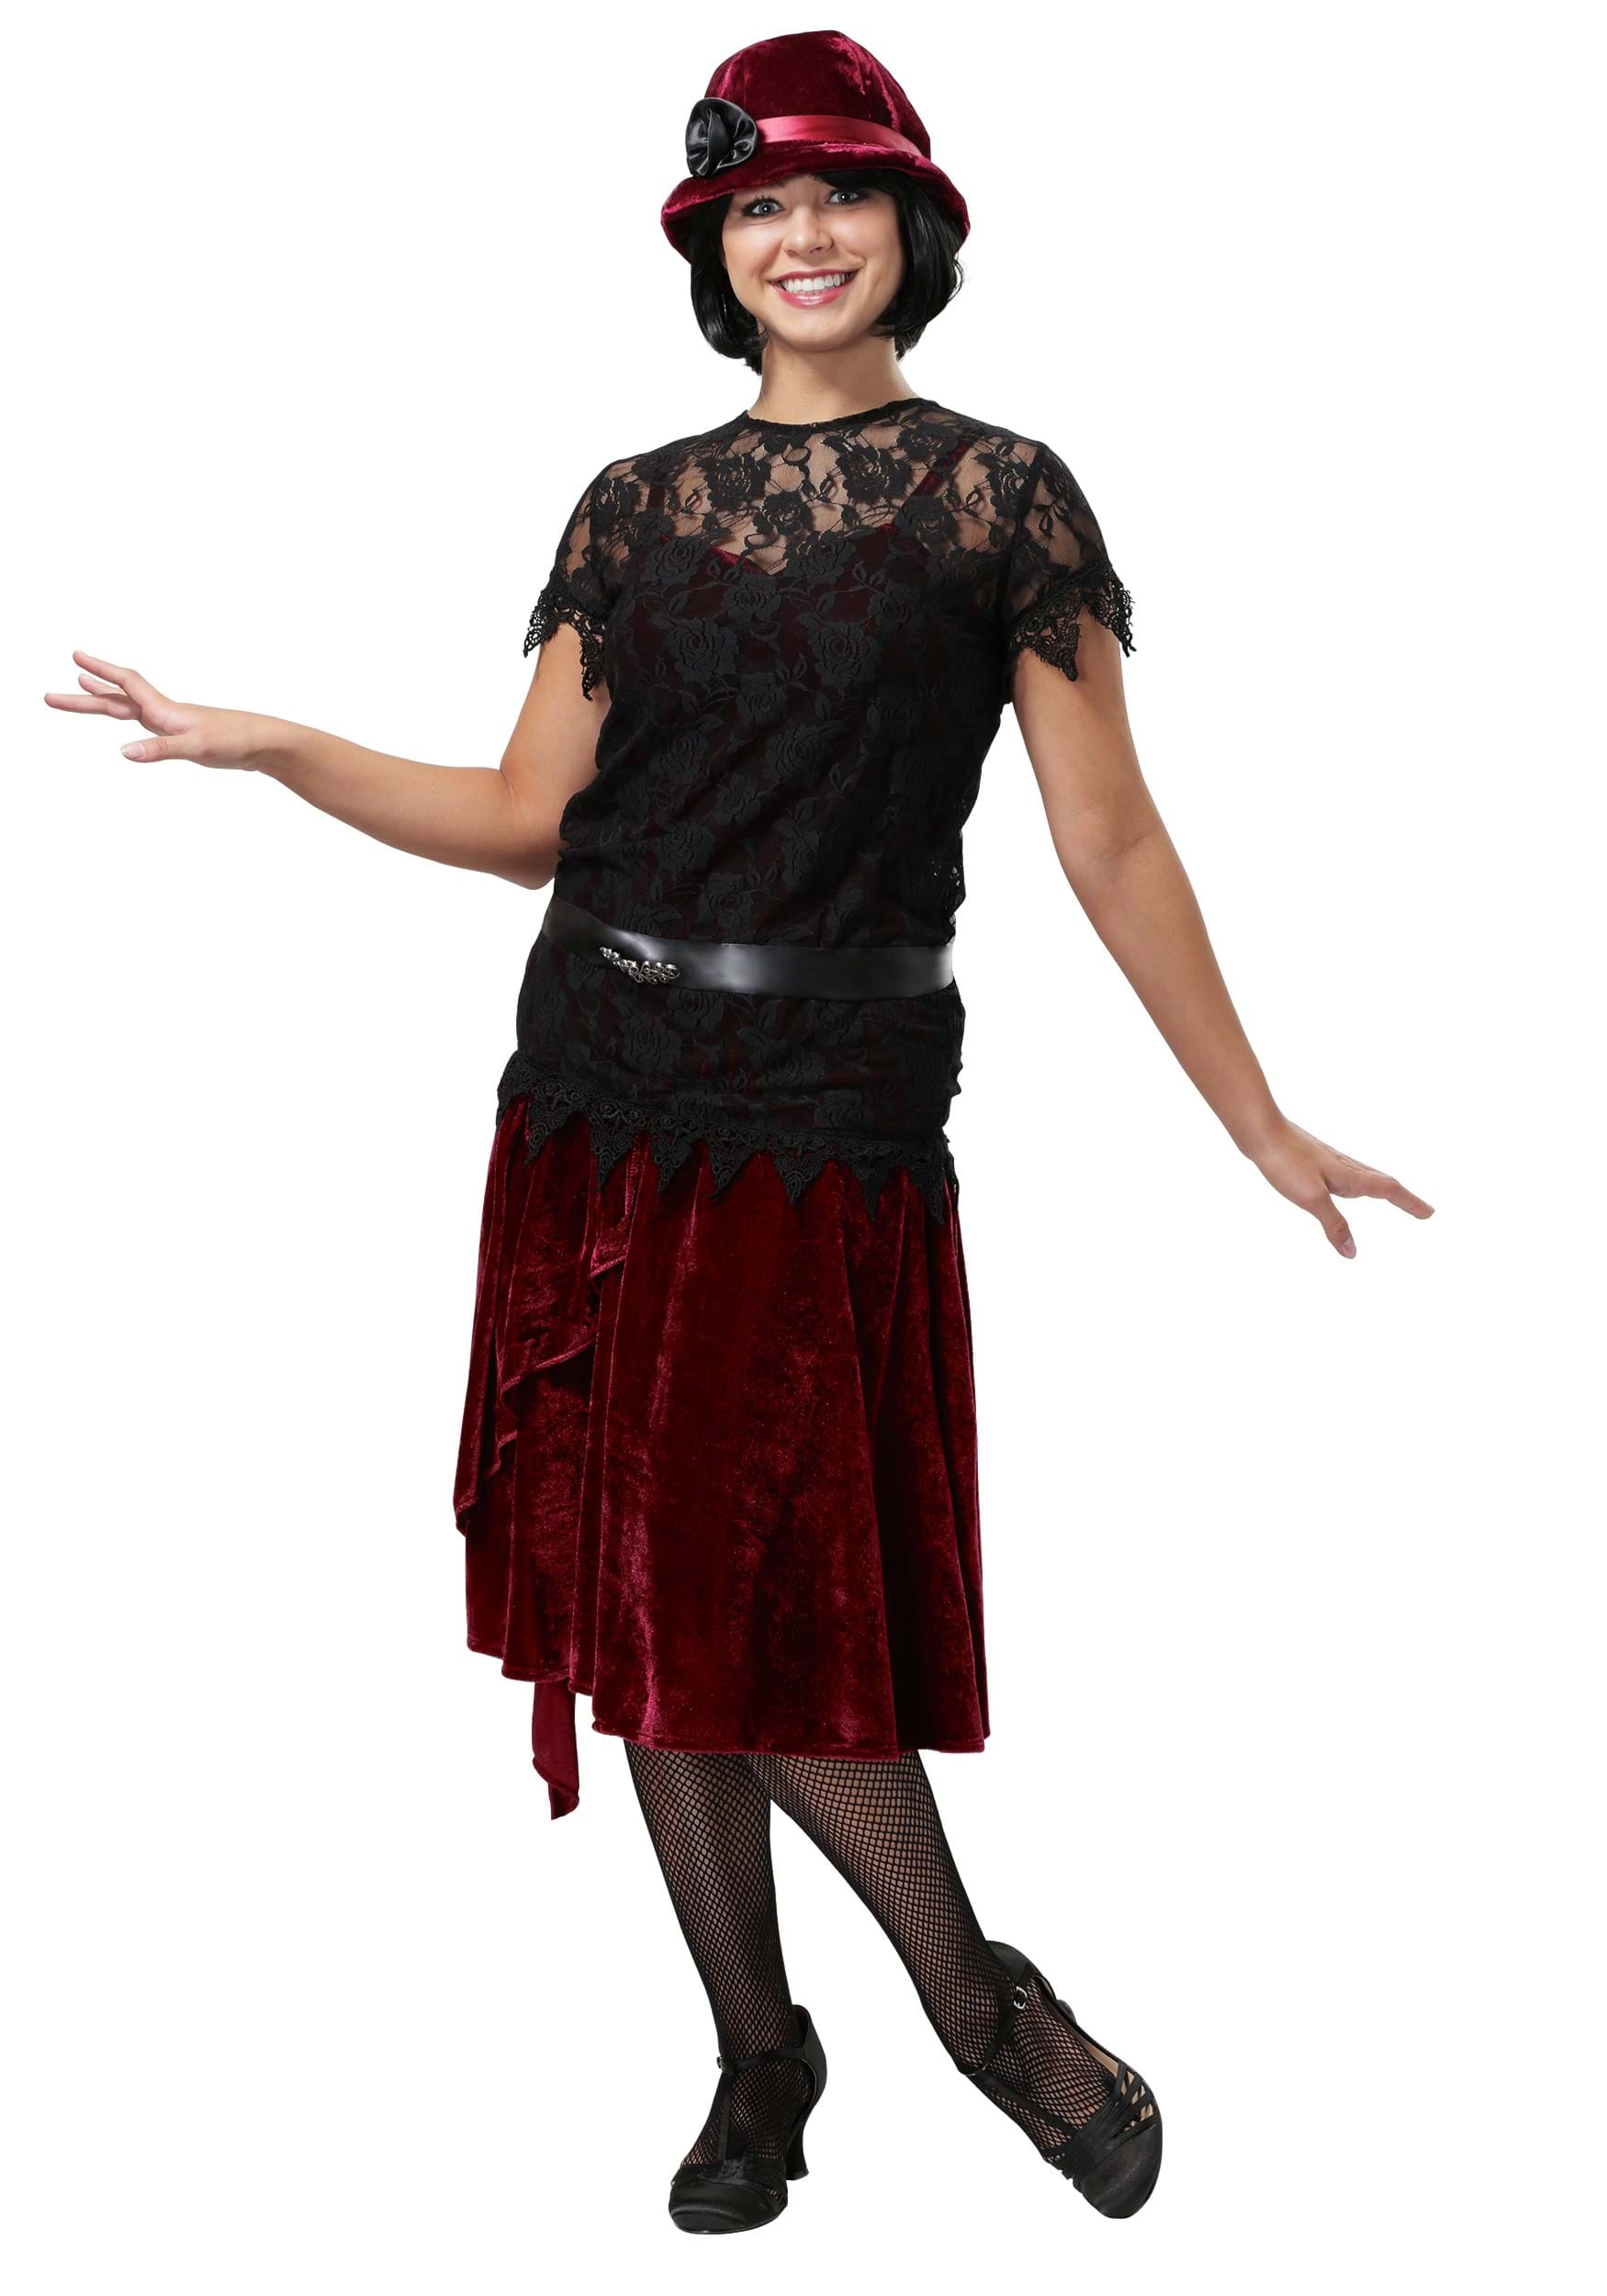 Buy Boardwalk Empire Inspired Dresses Plus Size Toe Tappin Flapper Costume for Women $39.99 AT vintagedancer.com